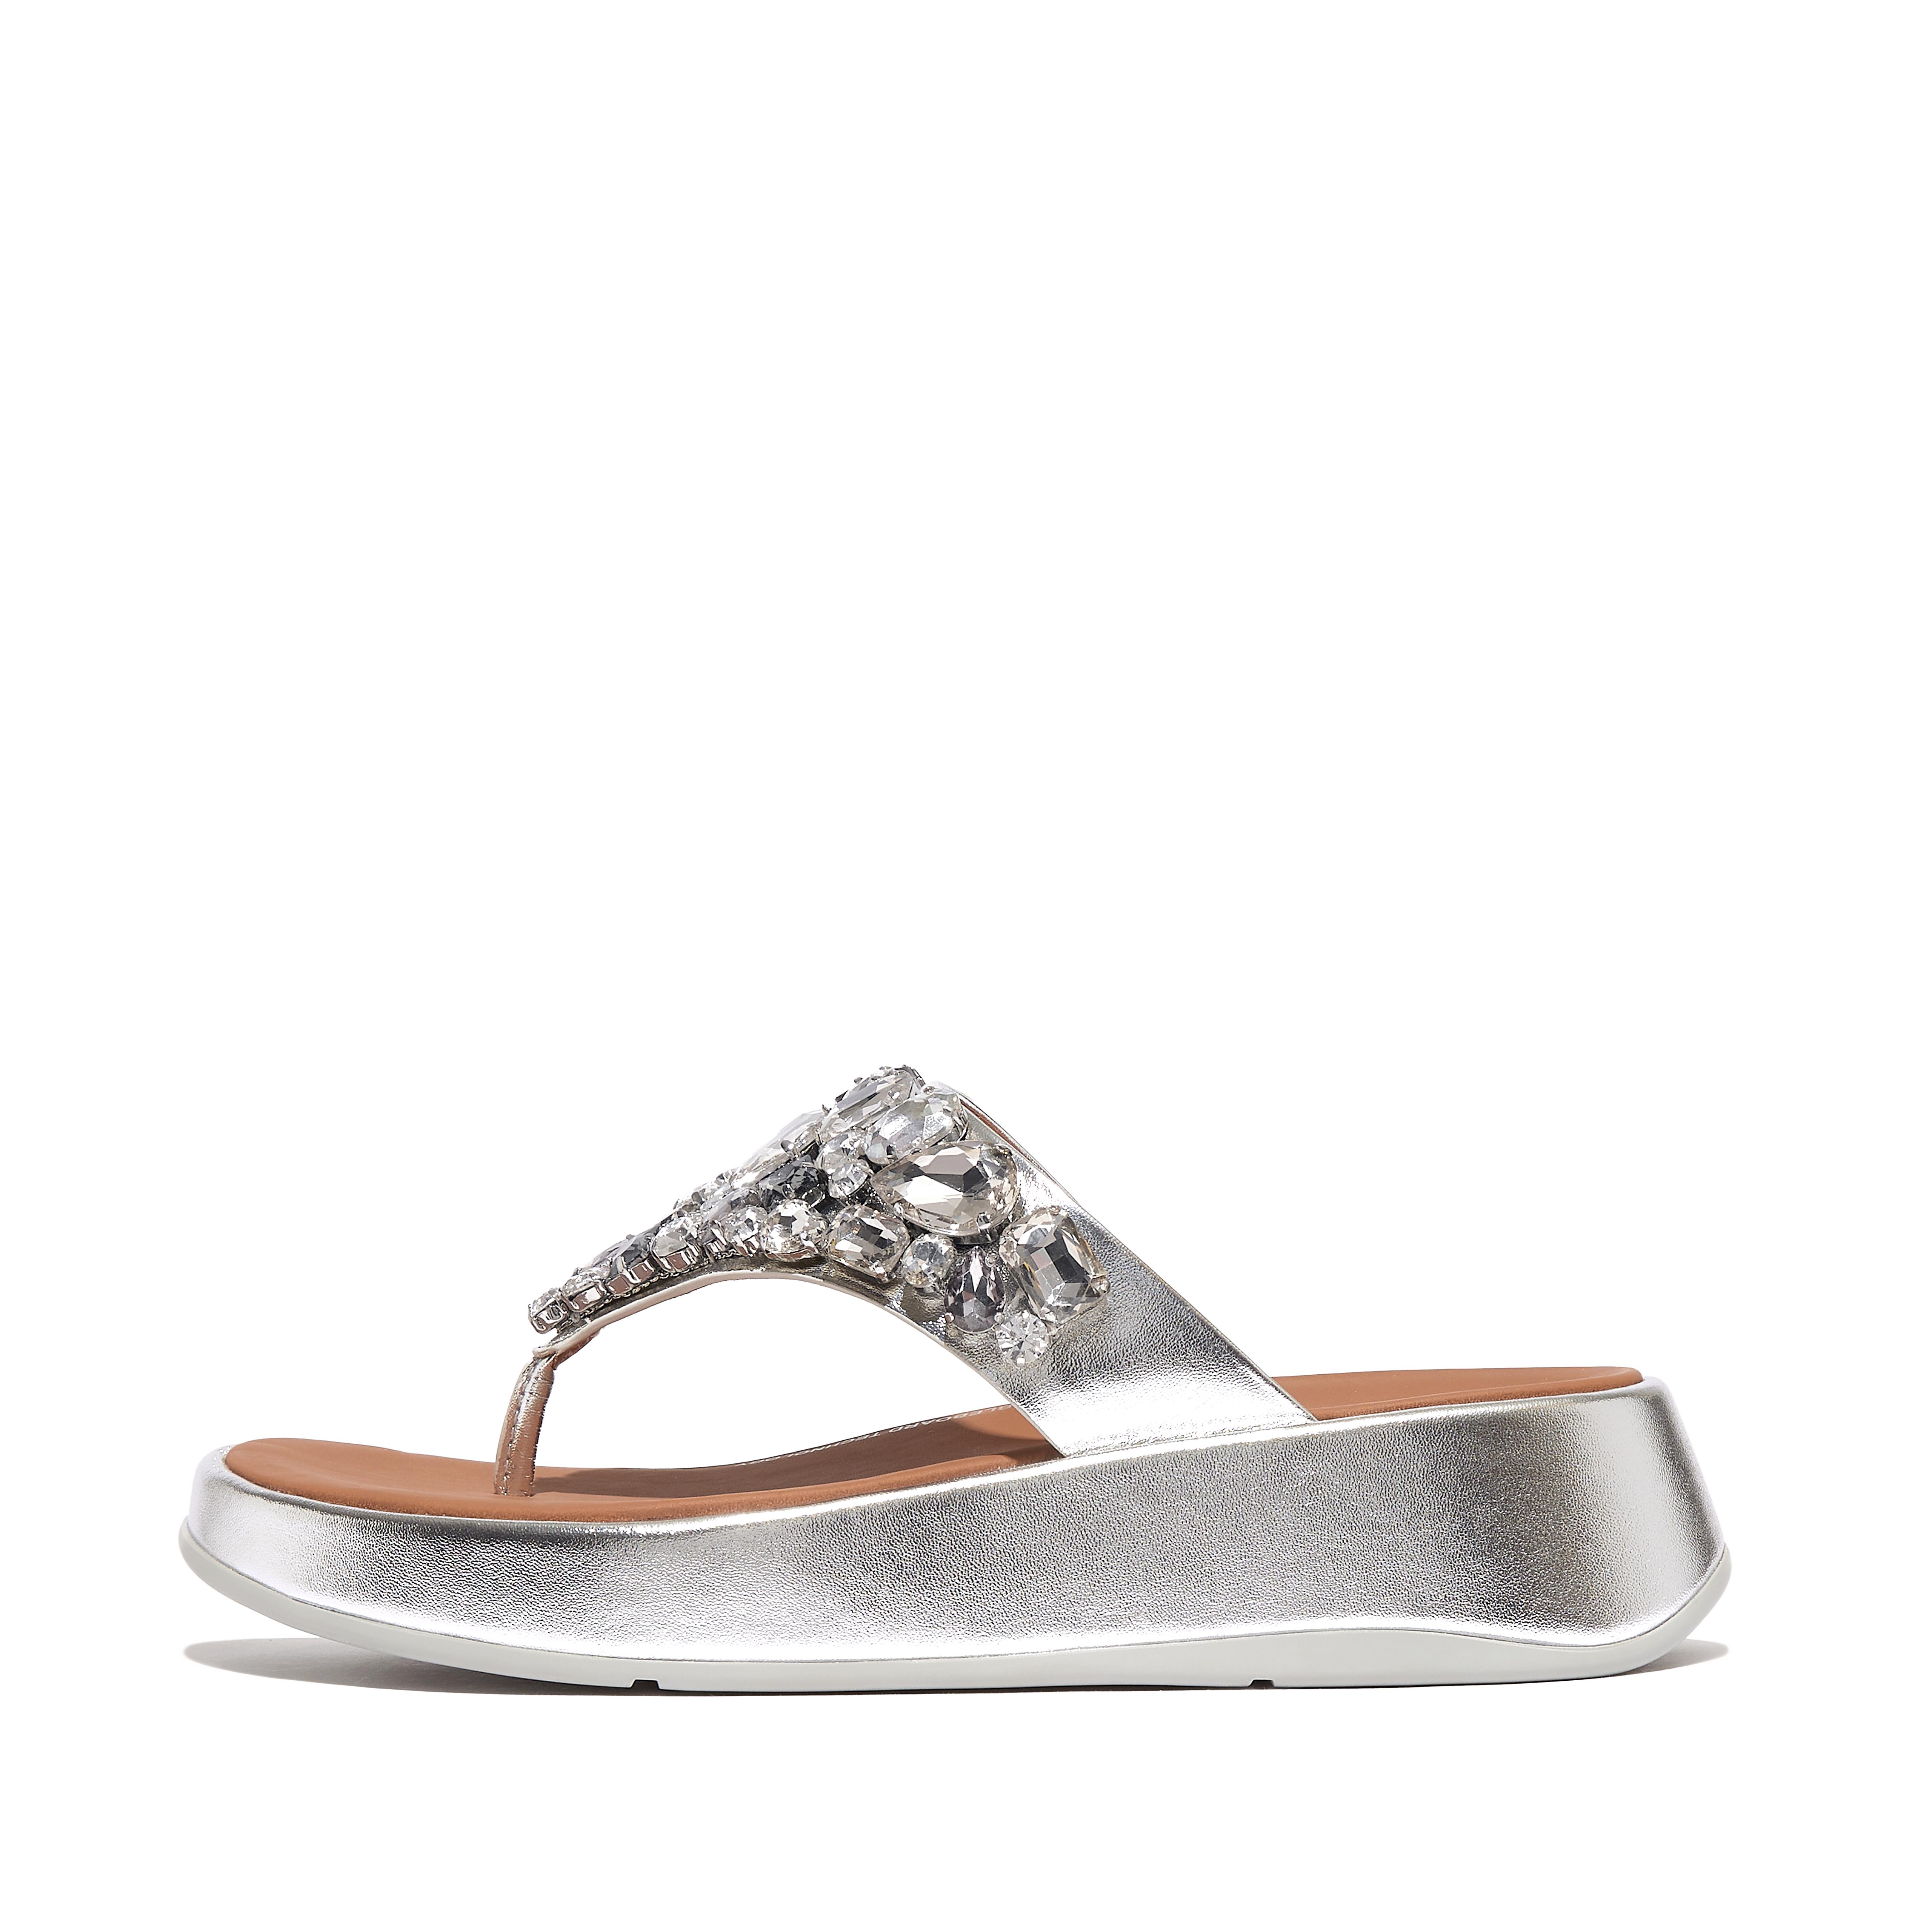 Fitflop Jewel-Deluxe Metallic-Leather Flatform Toe-Post Sandals,Silver